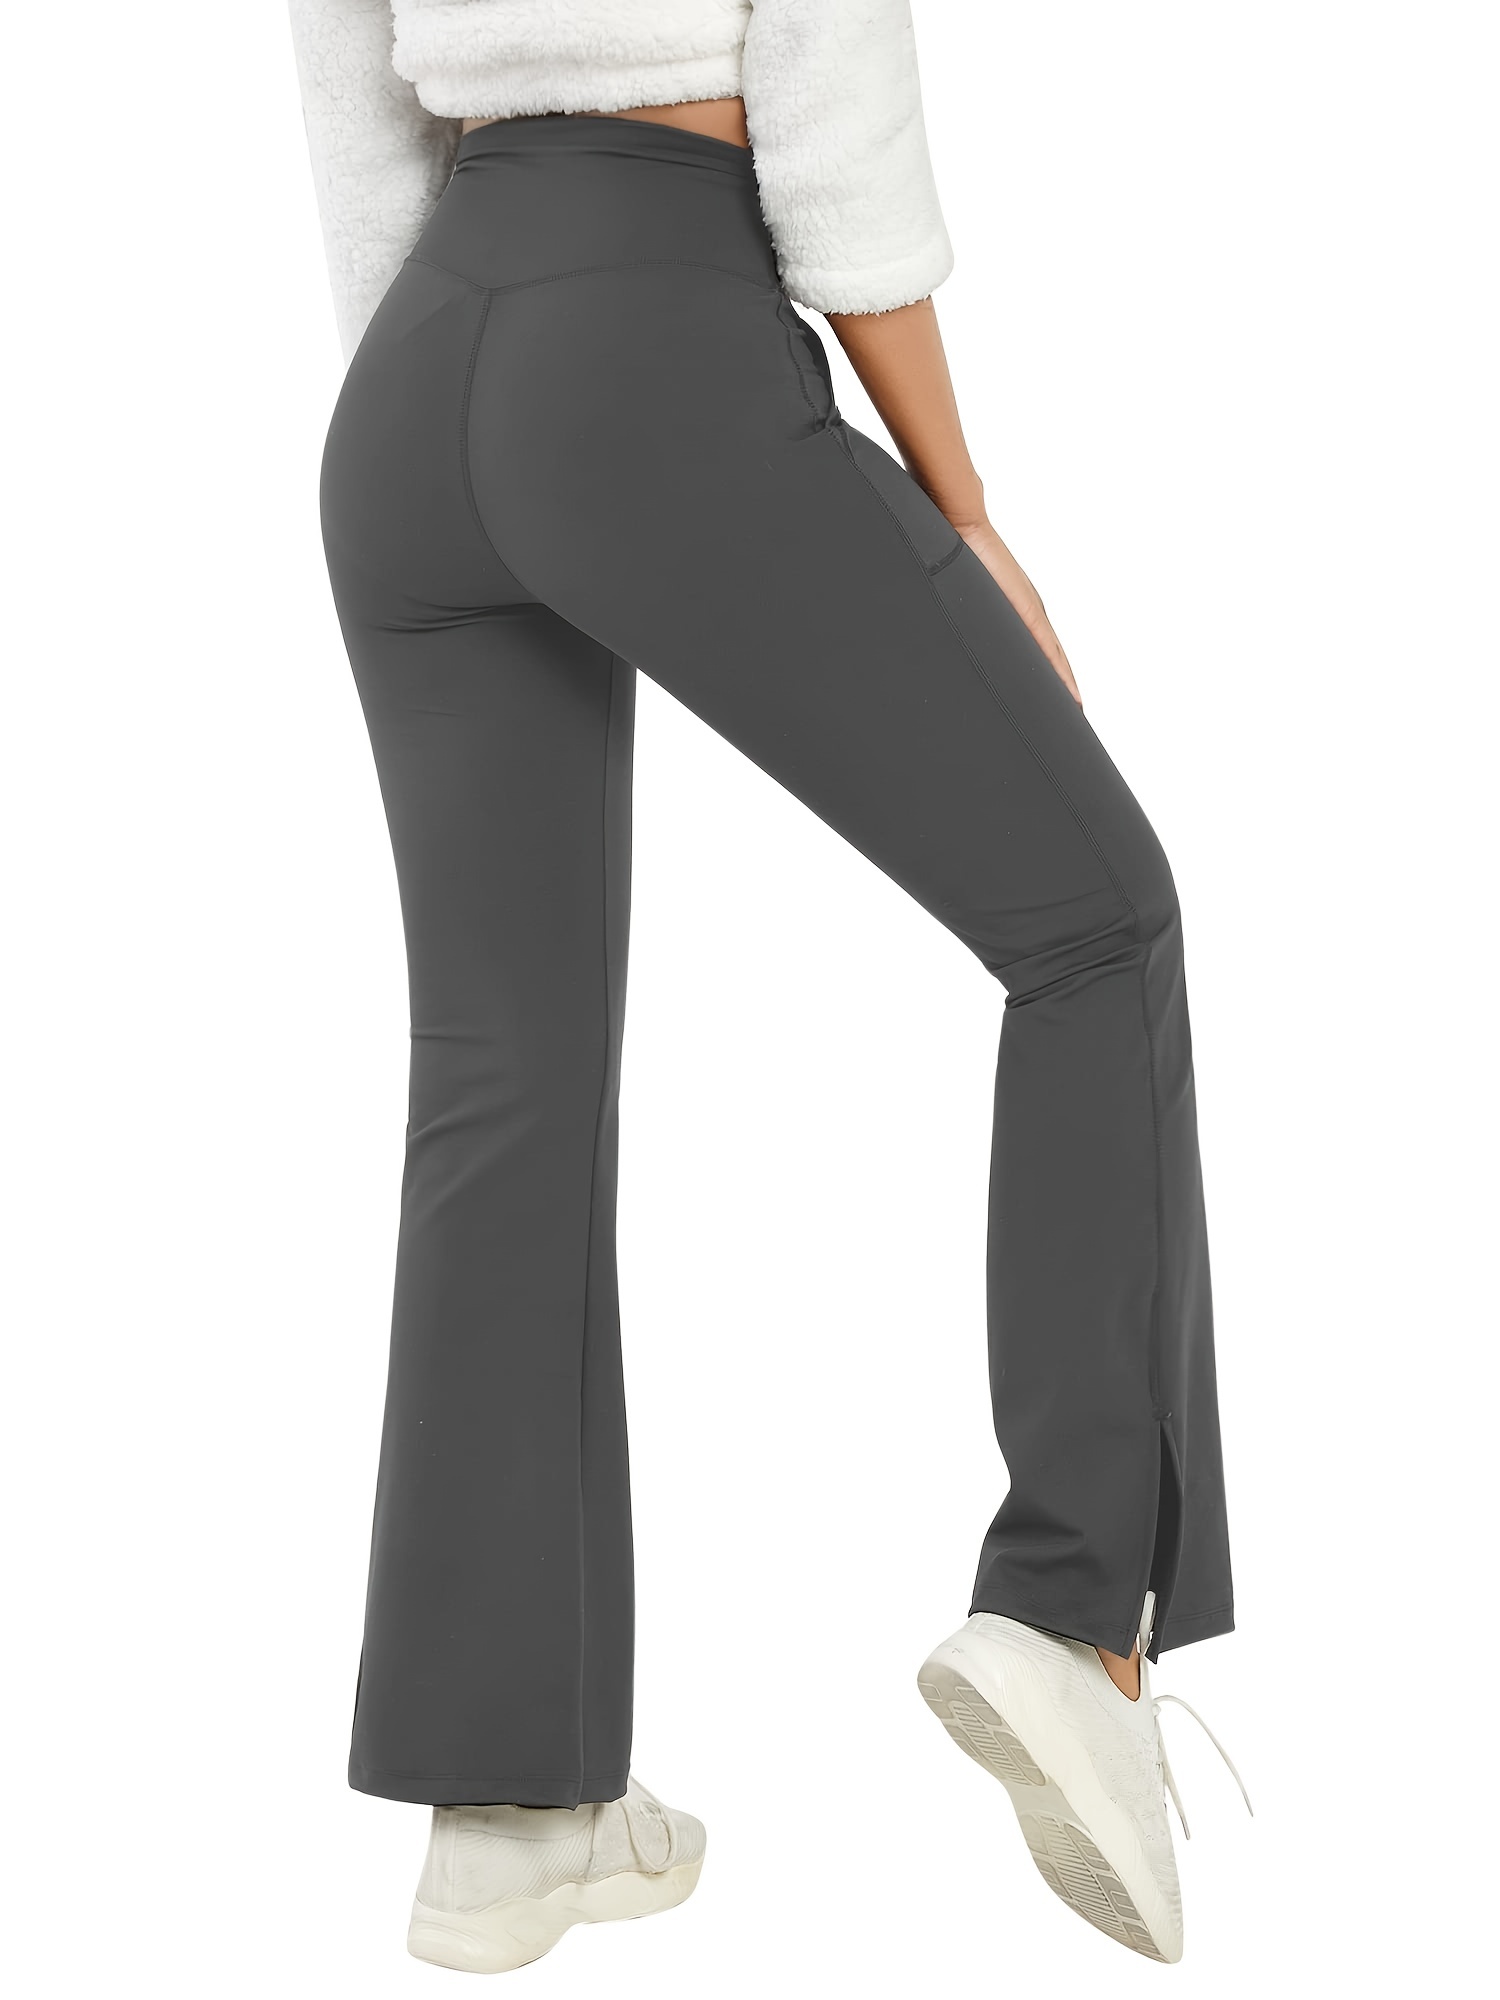 HSMQHJWE Back Pocket Yoga Pants for Women Women's Pure Color